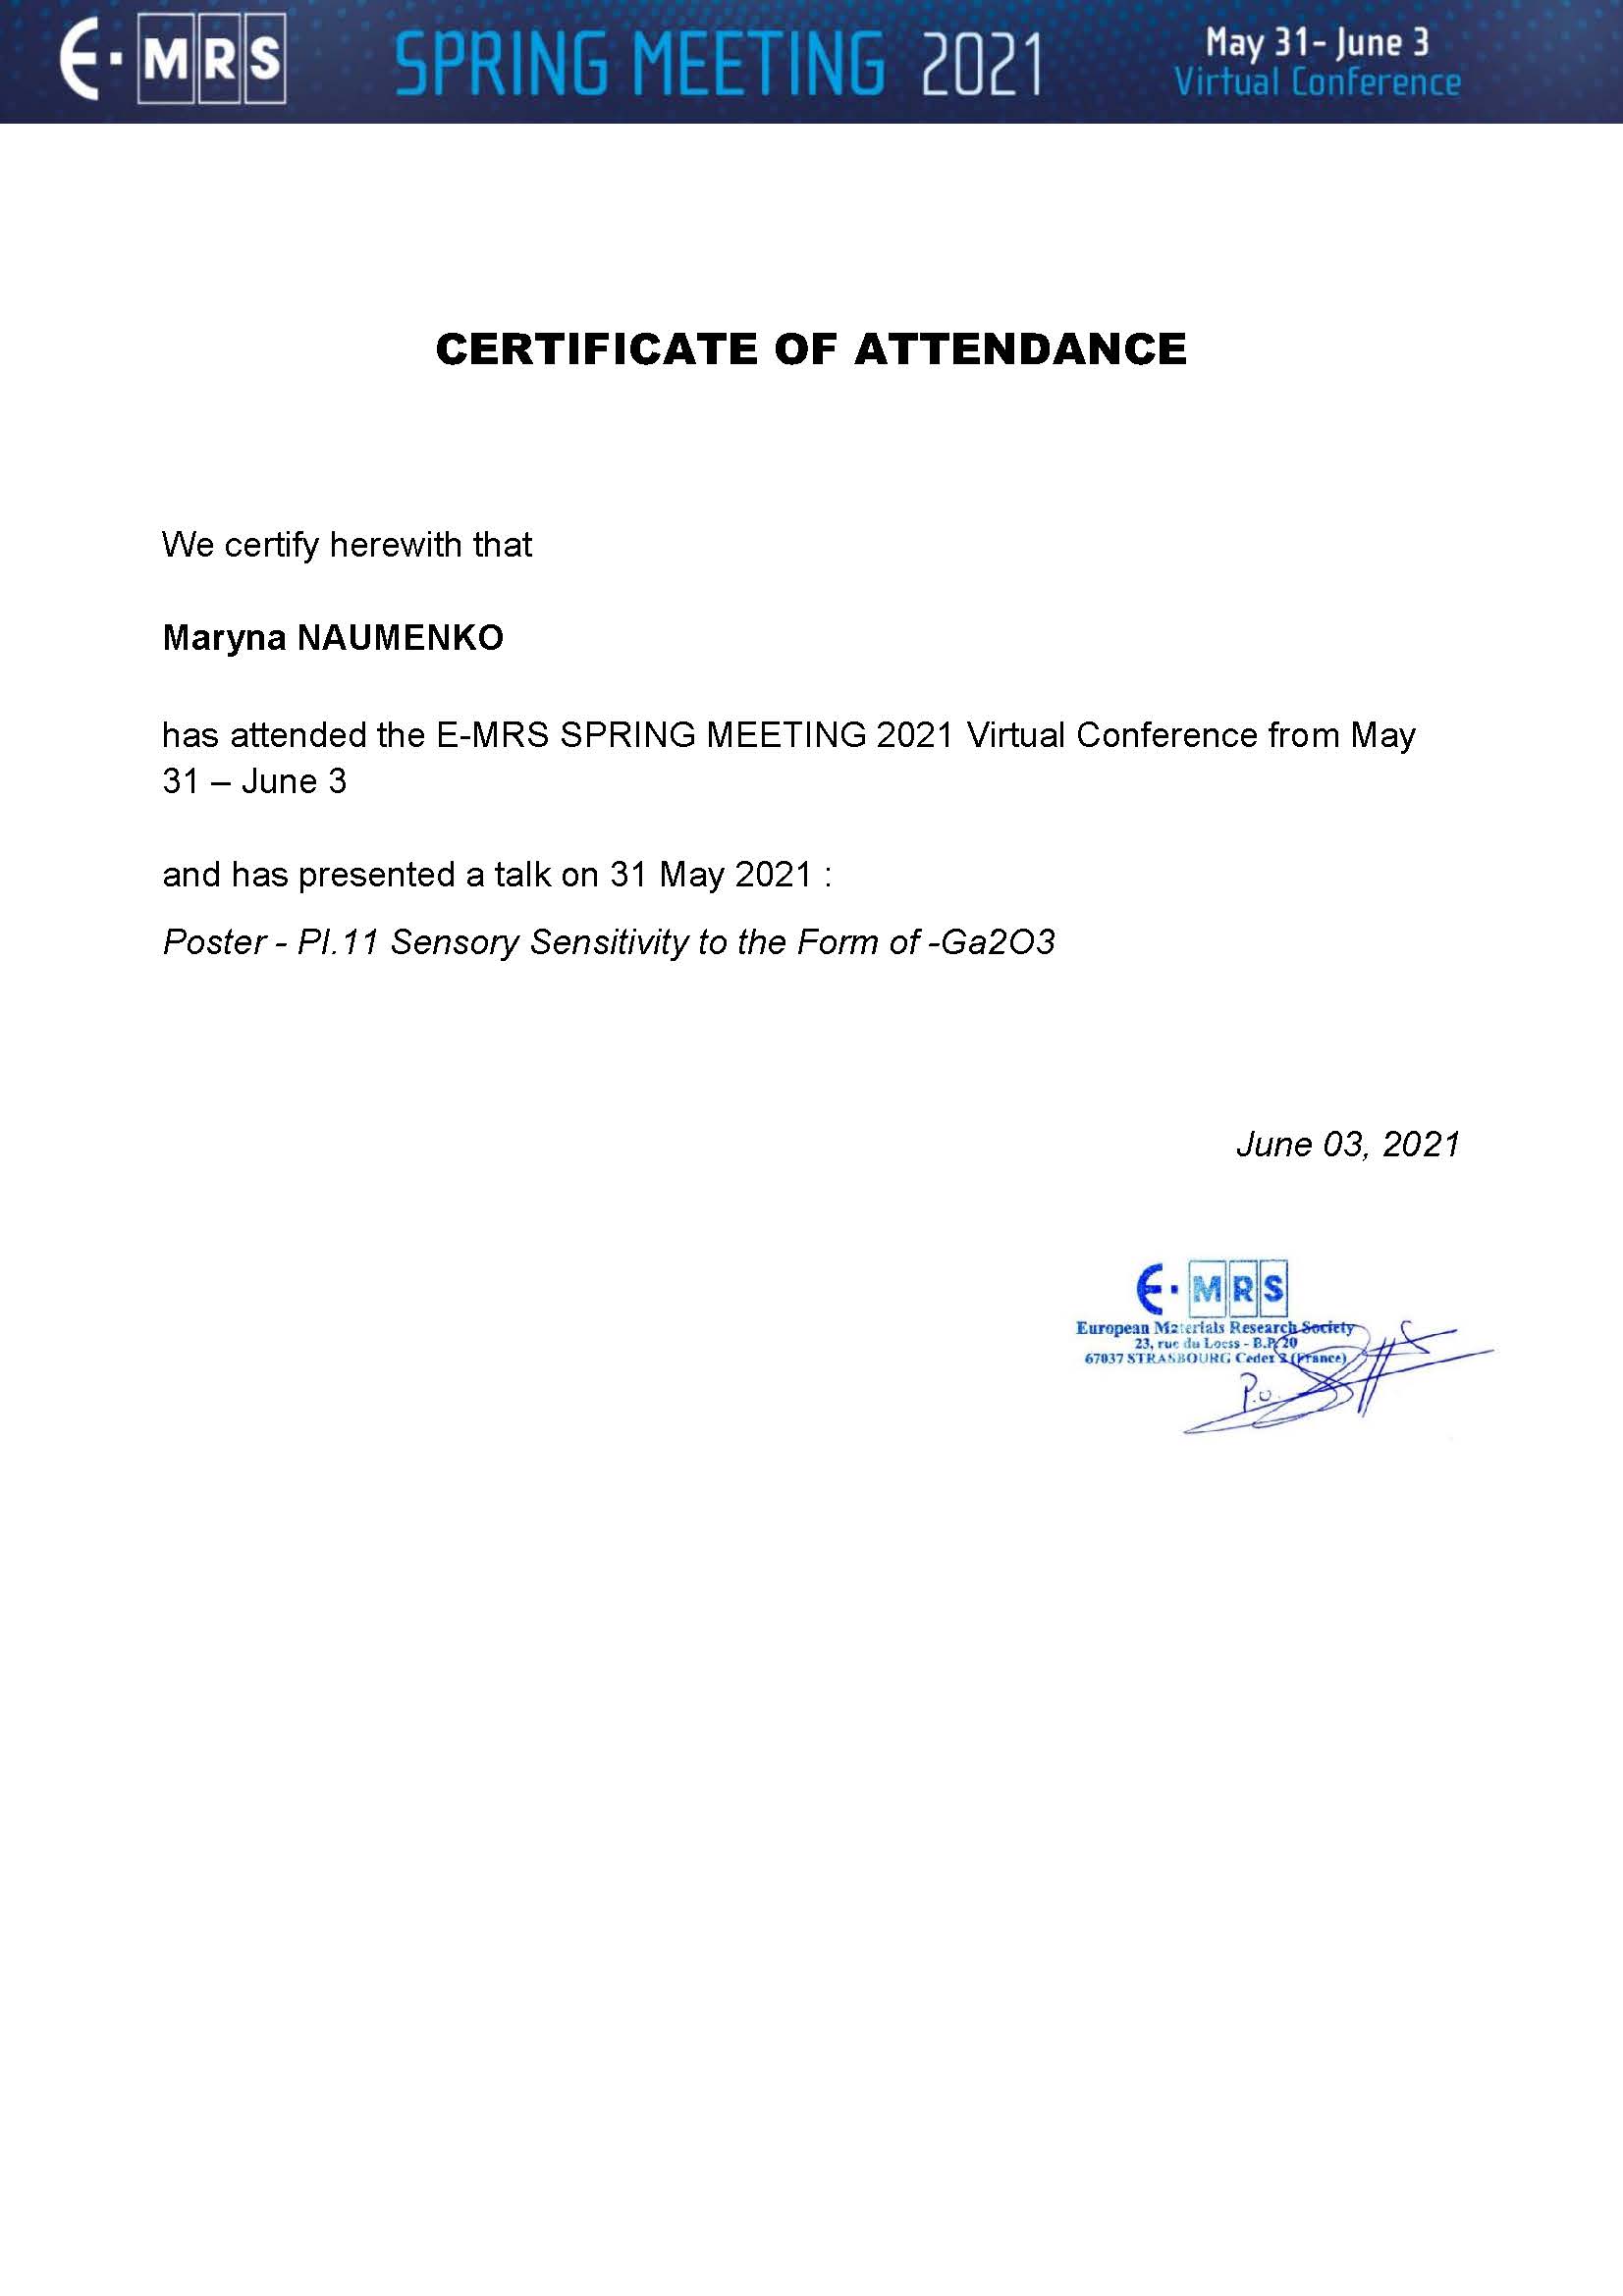 Certificate of attendance speaker NAUMENKO Maryna